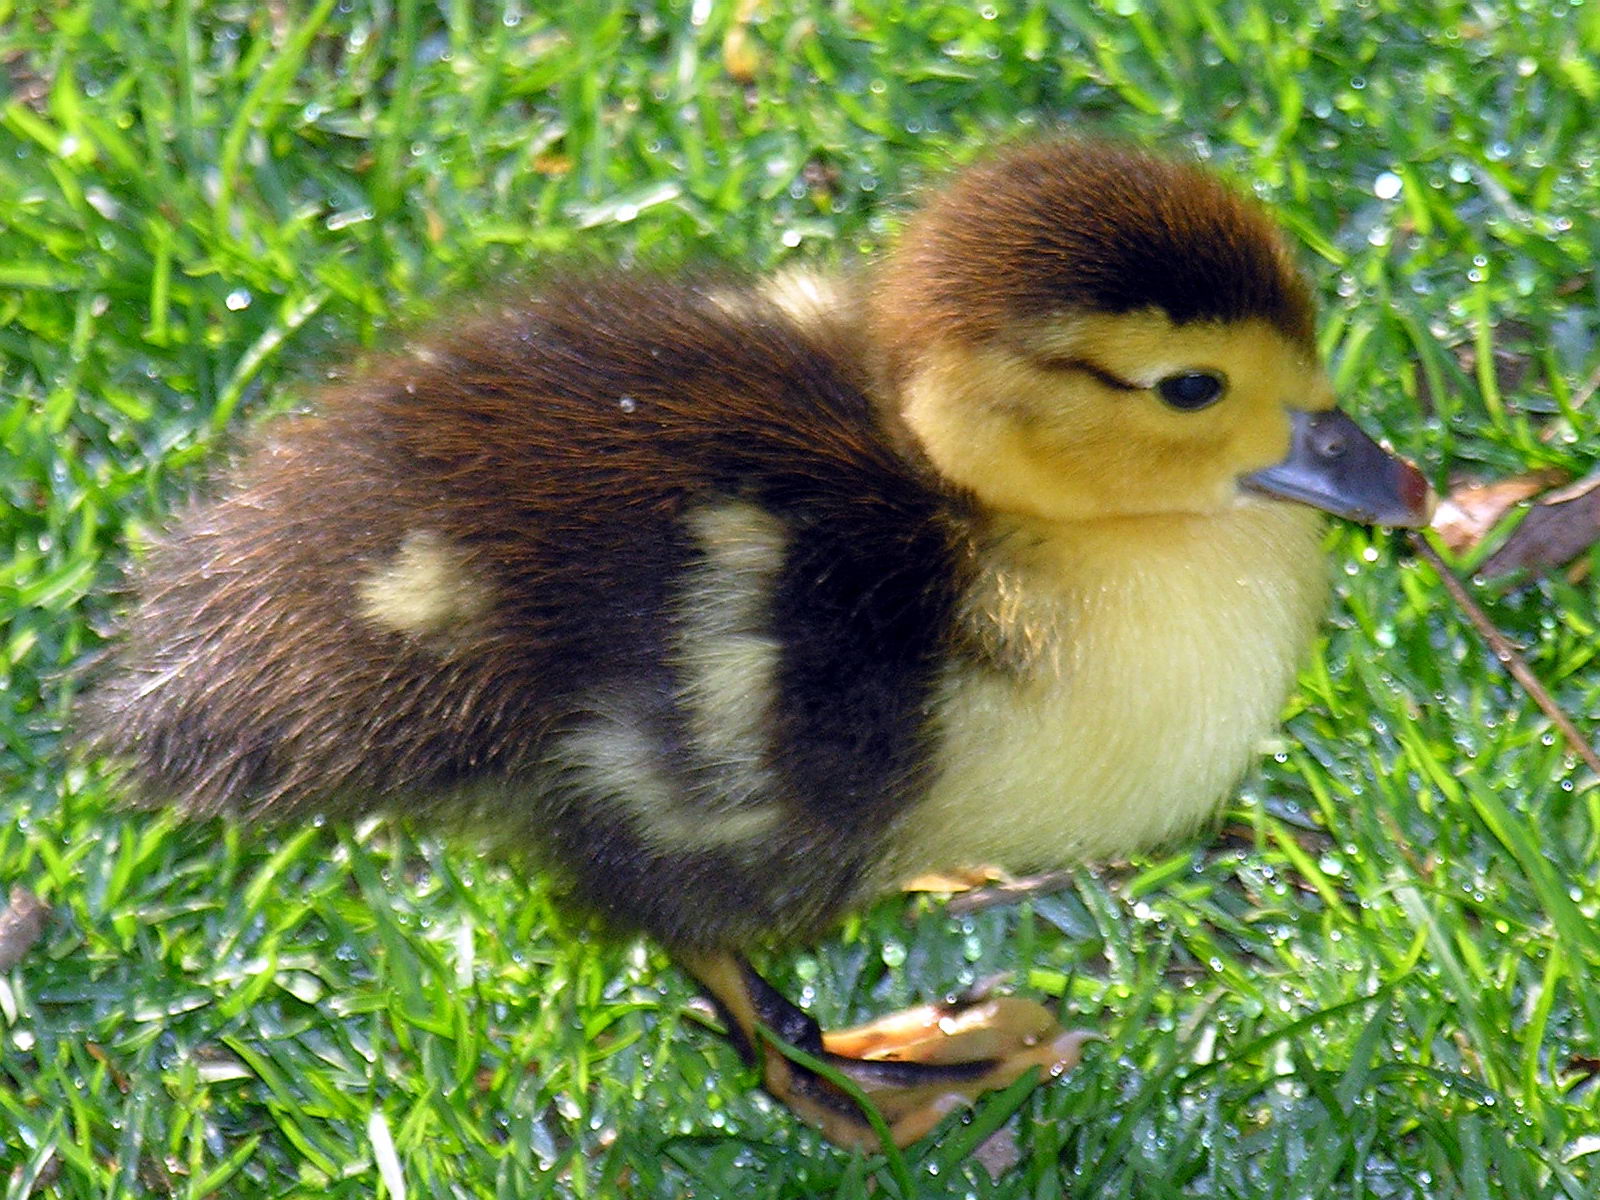 A Muscovy duck duckling.